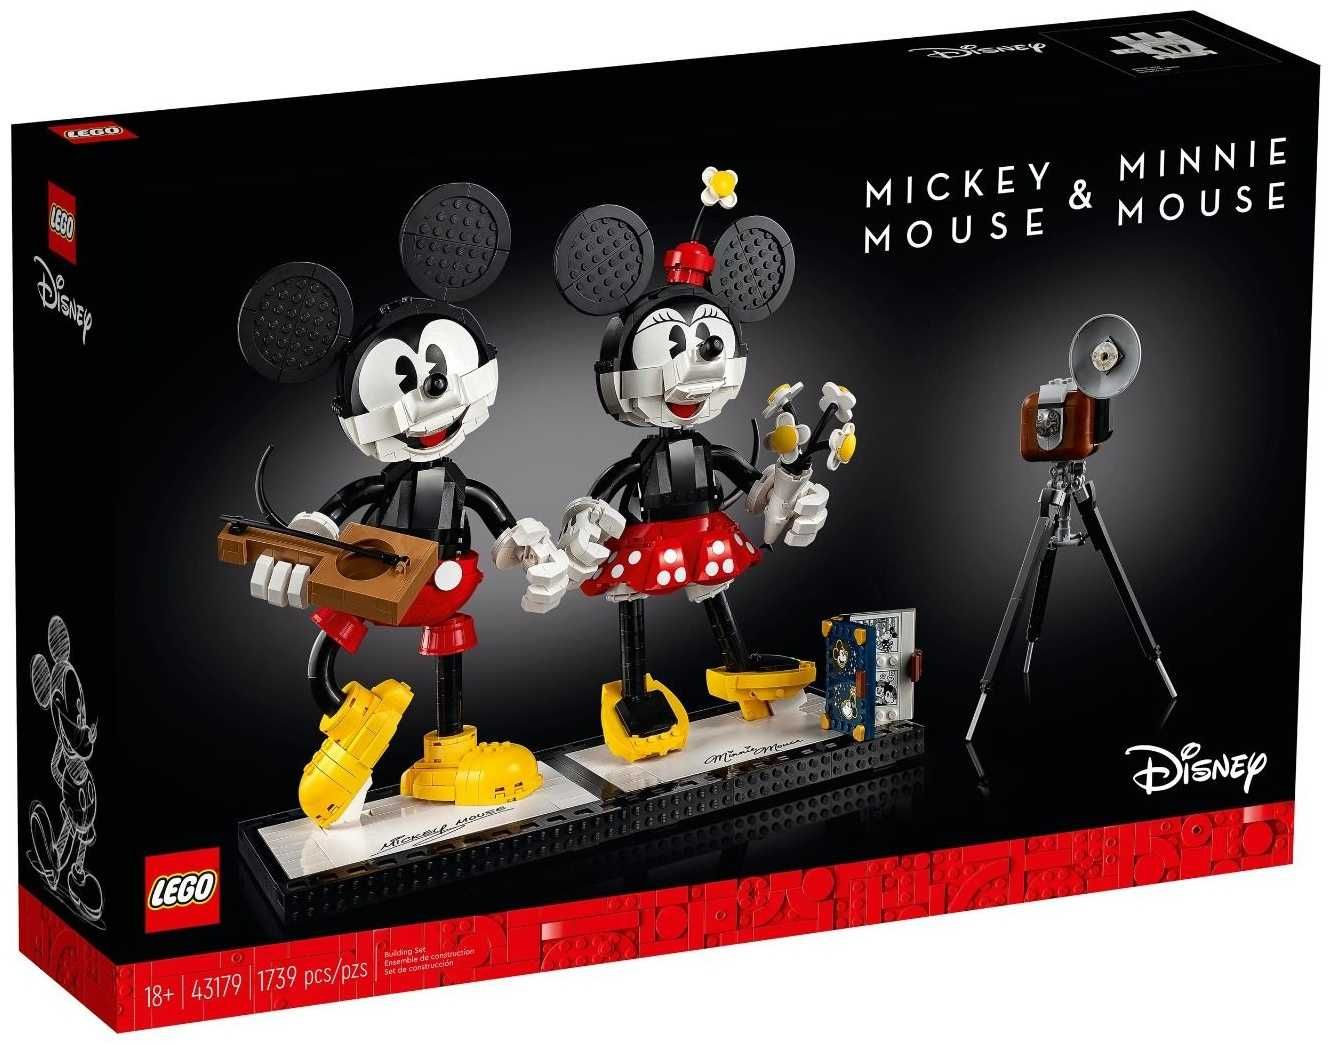 LEGO Микки Маус и Минни Маус 43179  Mickey Mouse ART 31202 НОВЫЙ